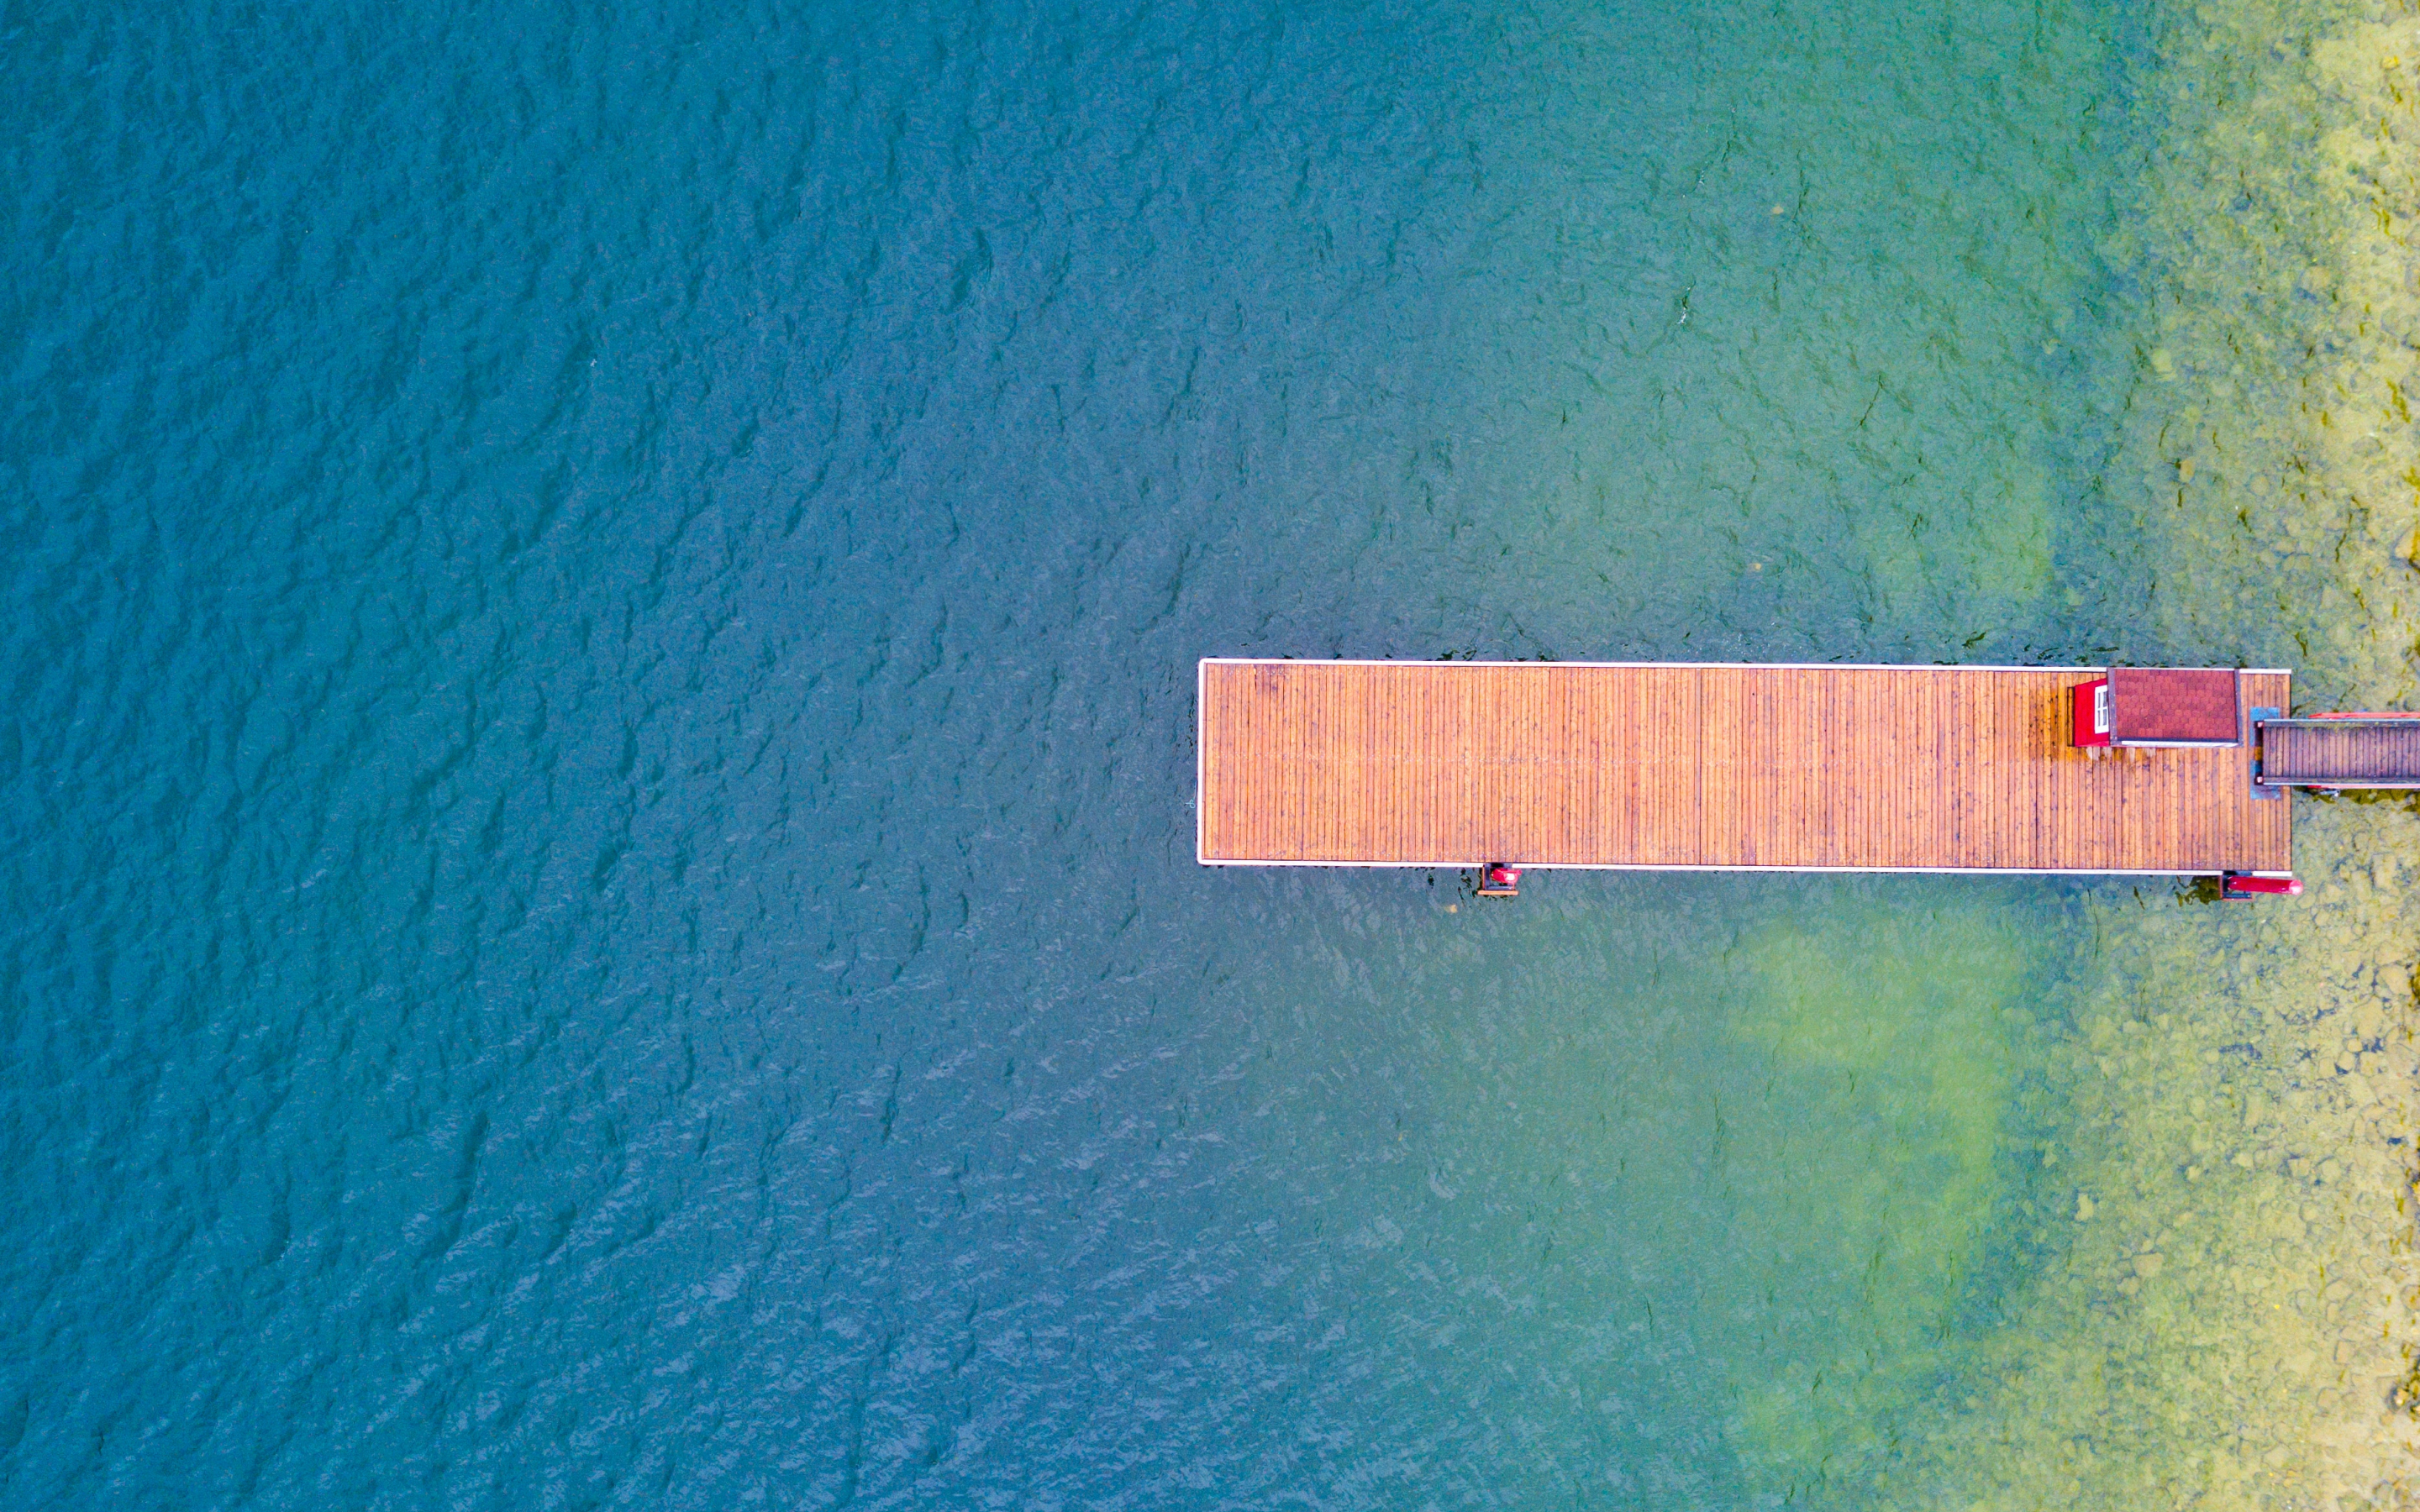 Pier, summer, vacation, holiday, aerial view, lake, 2880x1800 wallpaper